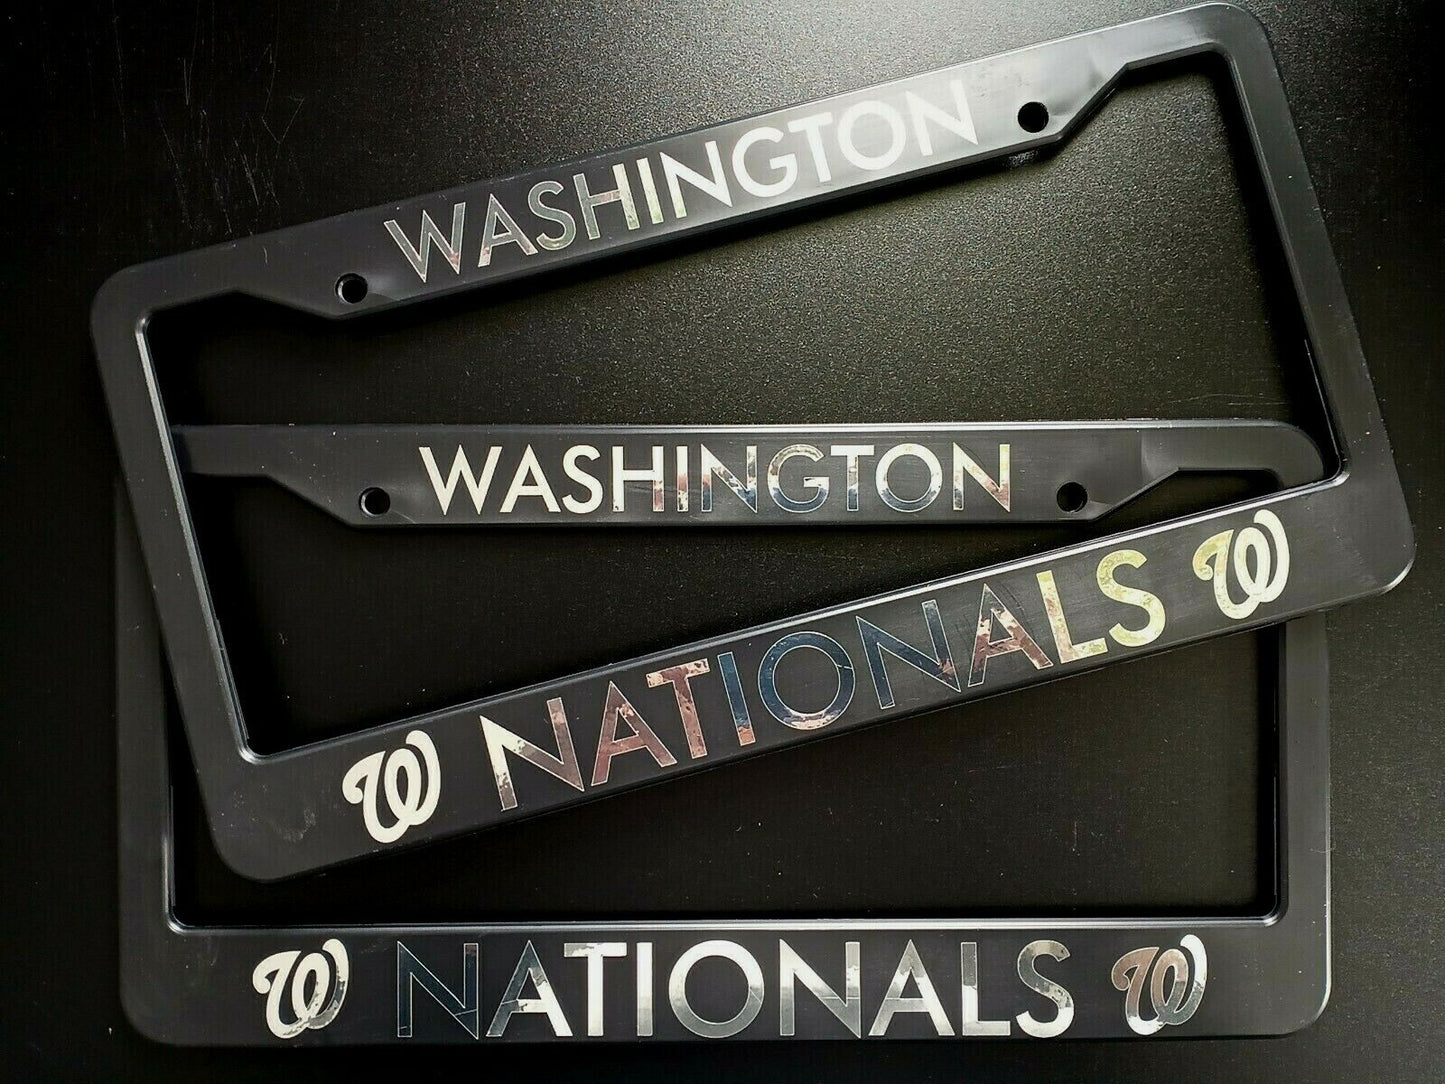 Set of 2 Washington Nationals  Car License Plate Frames Plastic or Aluminum Black Truck Parts Vehicle Accessories Auto Decor